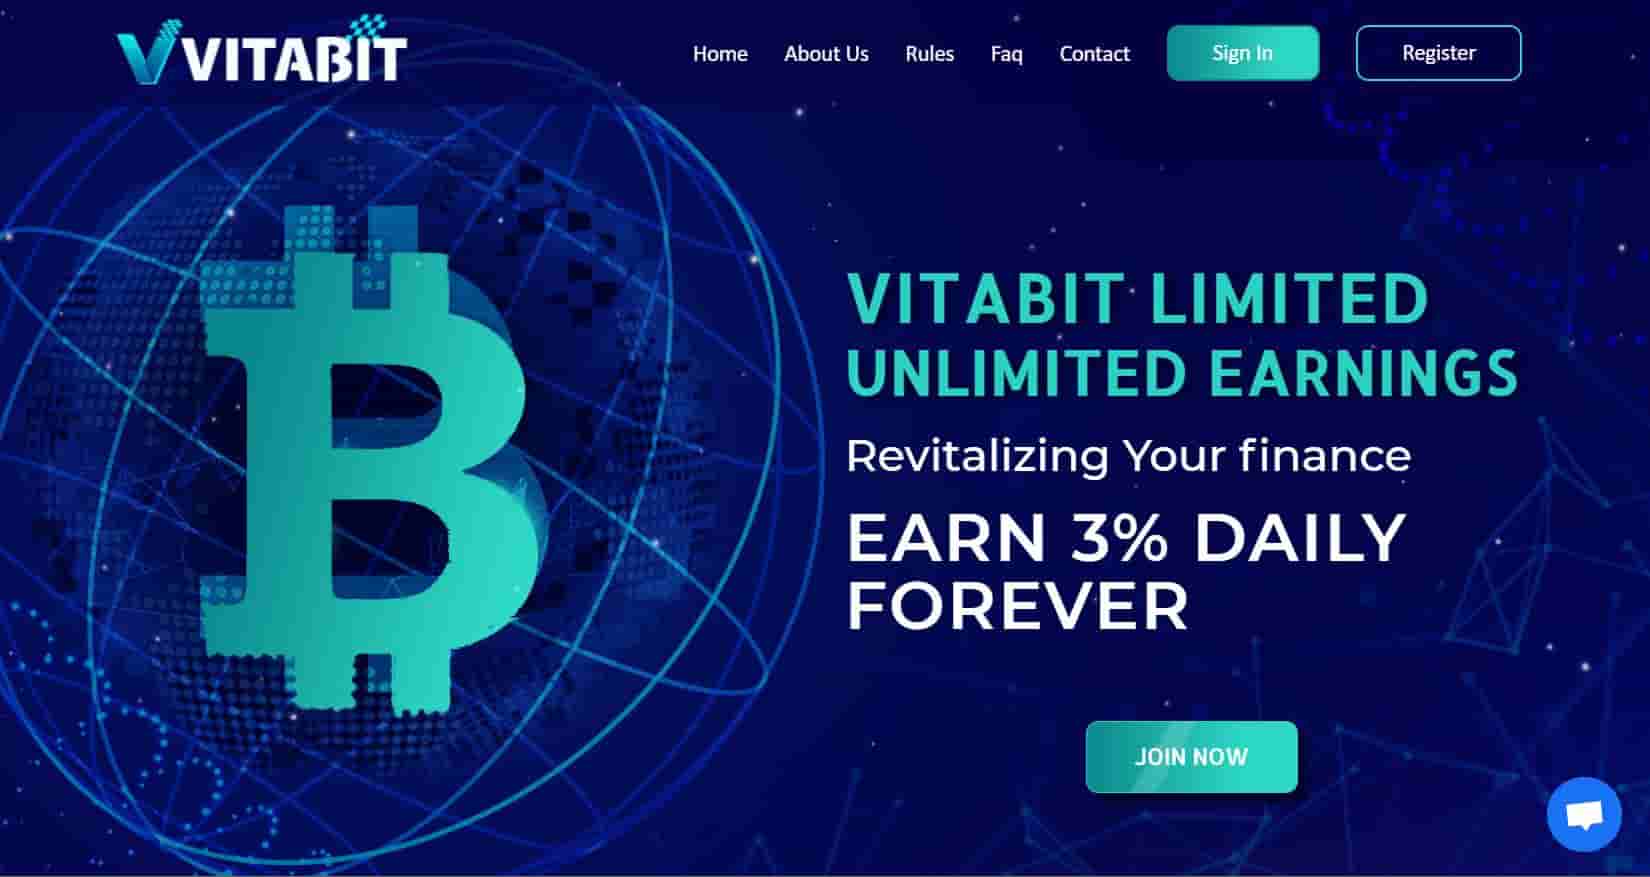 Vitabit Ltd